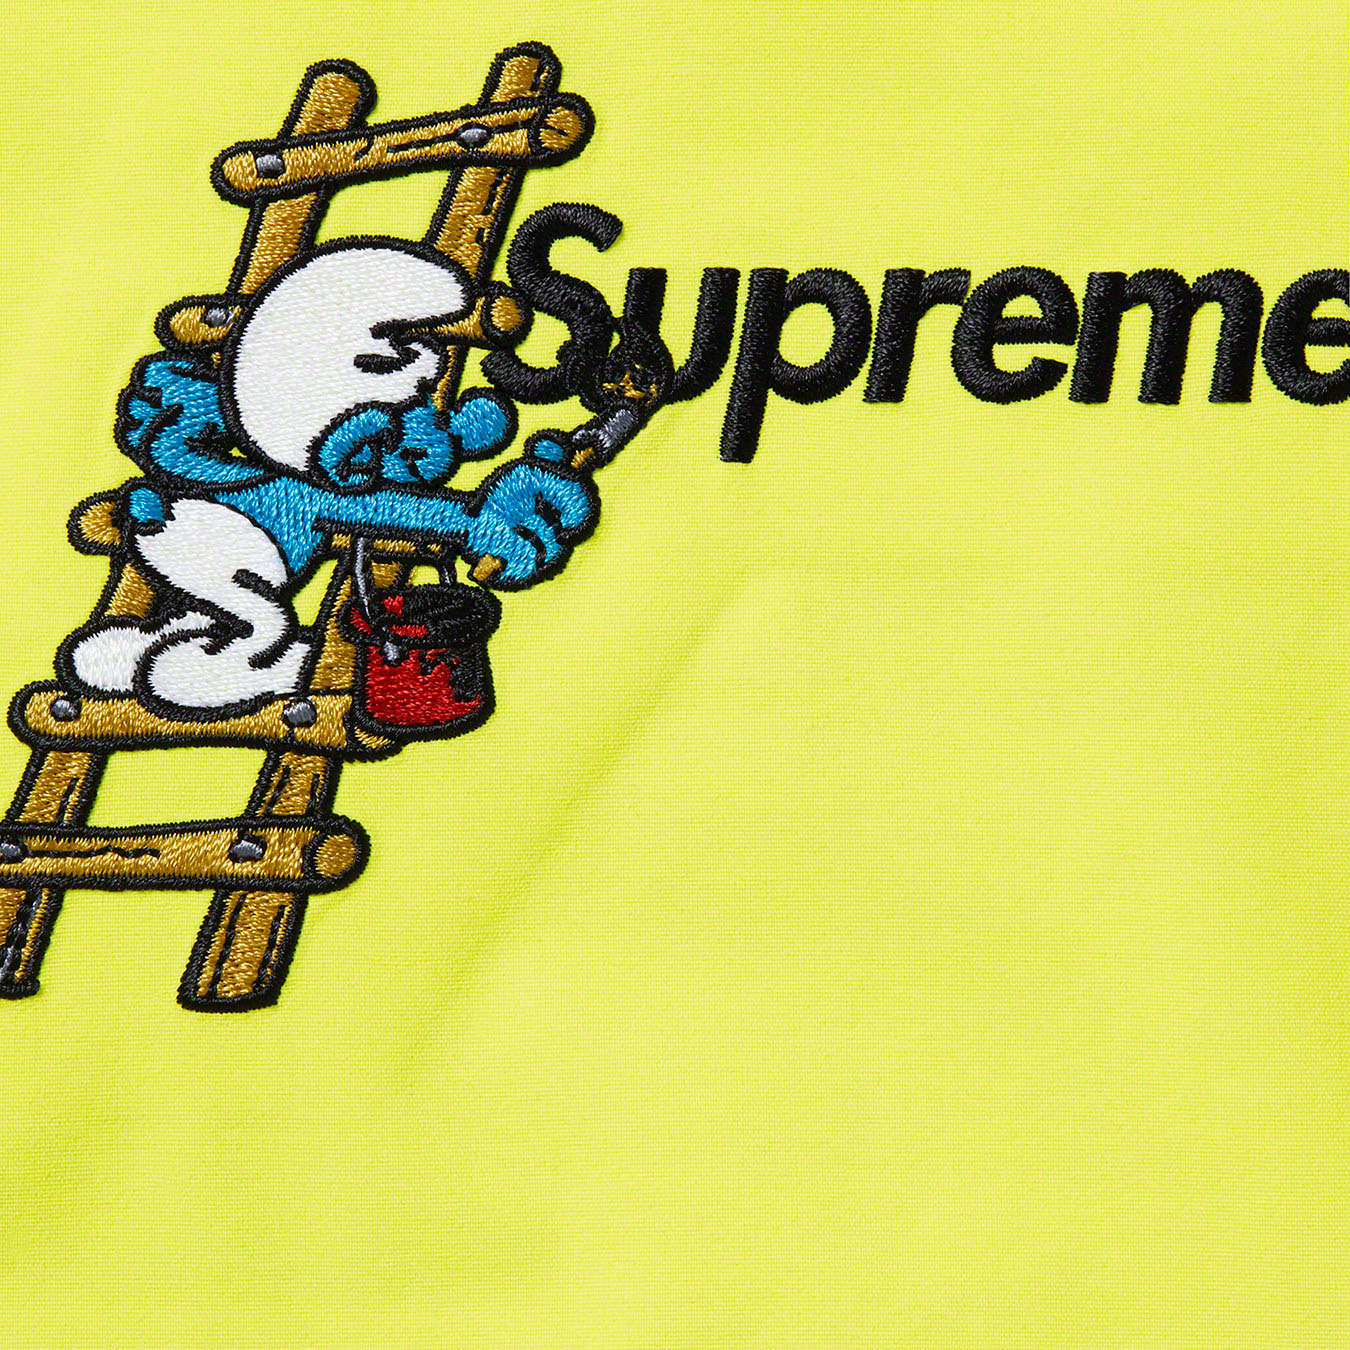 Supreme®/Smurfs™ GORE-TEX Shell Jacket